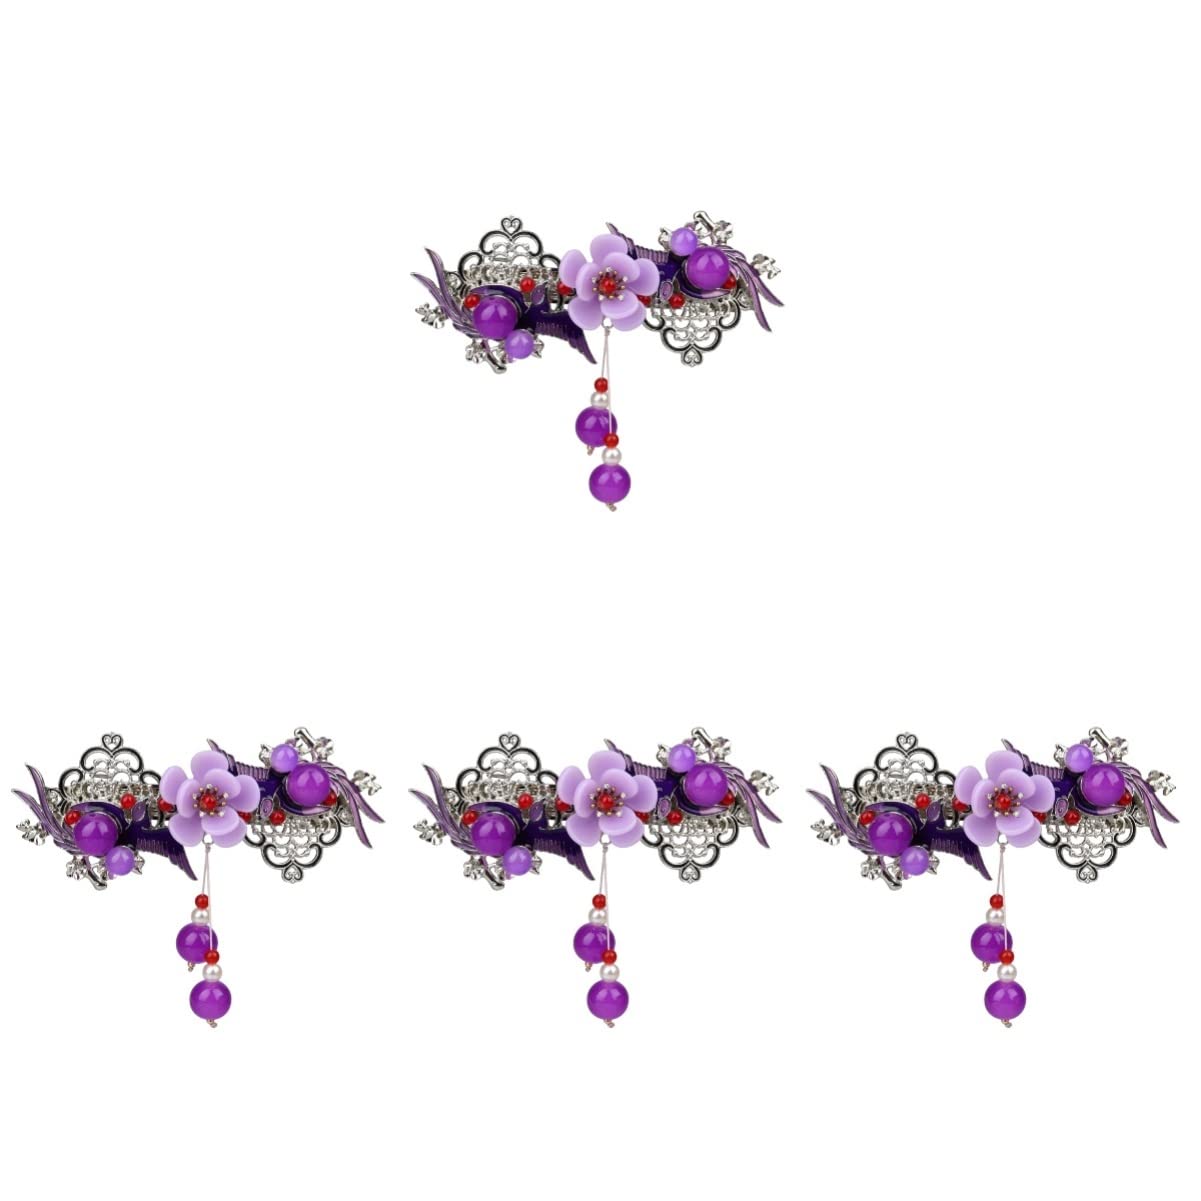 SHUBIAO 6 Stück Vintage Dekorative Blume Blume Haarspangen for Frauen Dekorative Haarspangen Haarschmuck for Frauen Haarspange Quaste Haarspangen (Color : Purplex5pcs, Size : 8.6X3.8X2.5CMx4pcs)